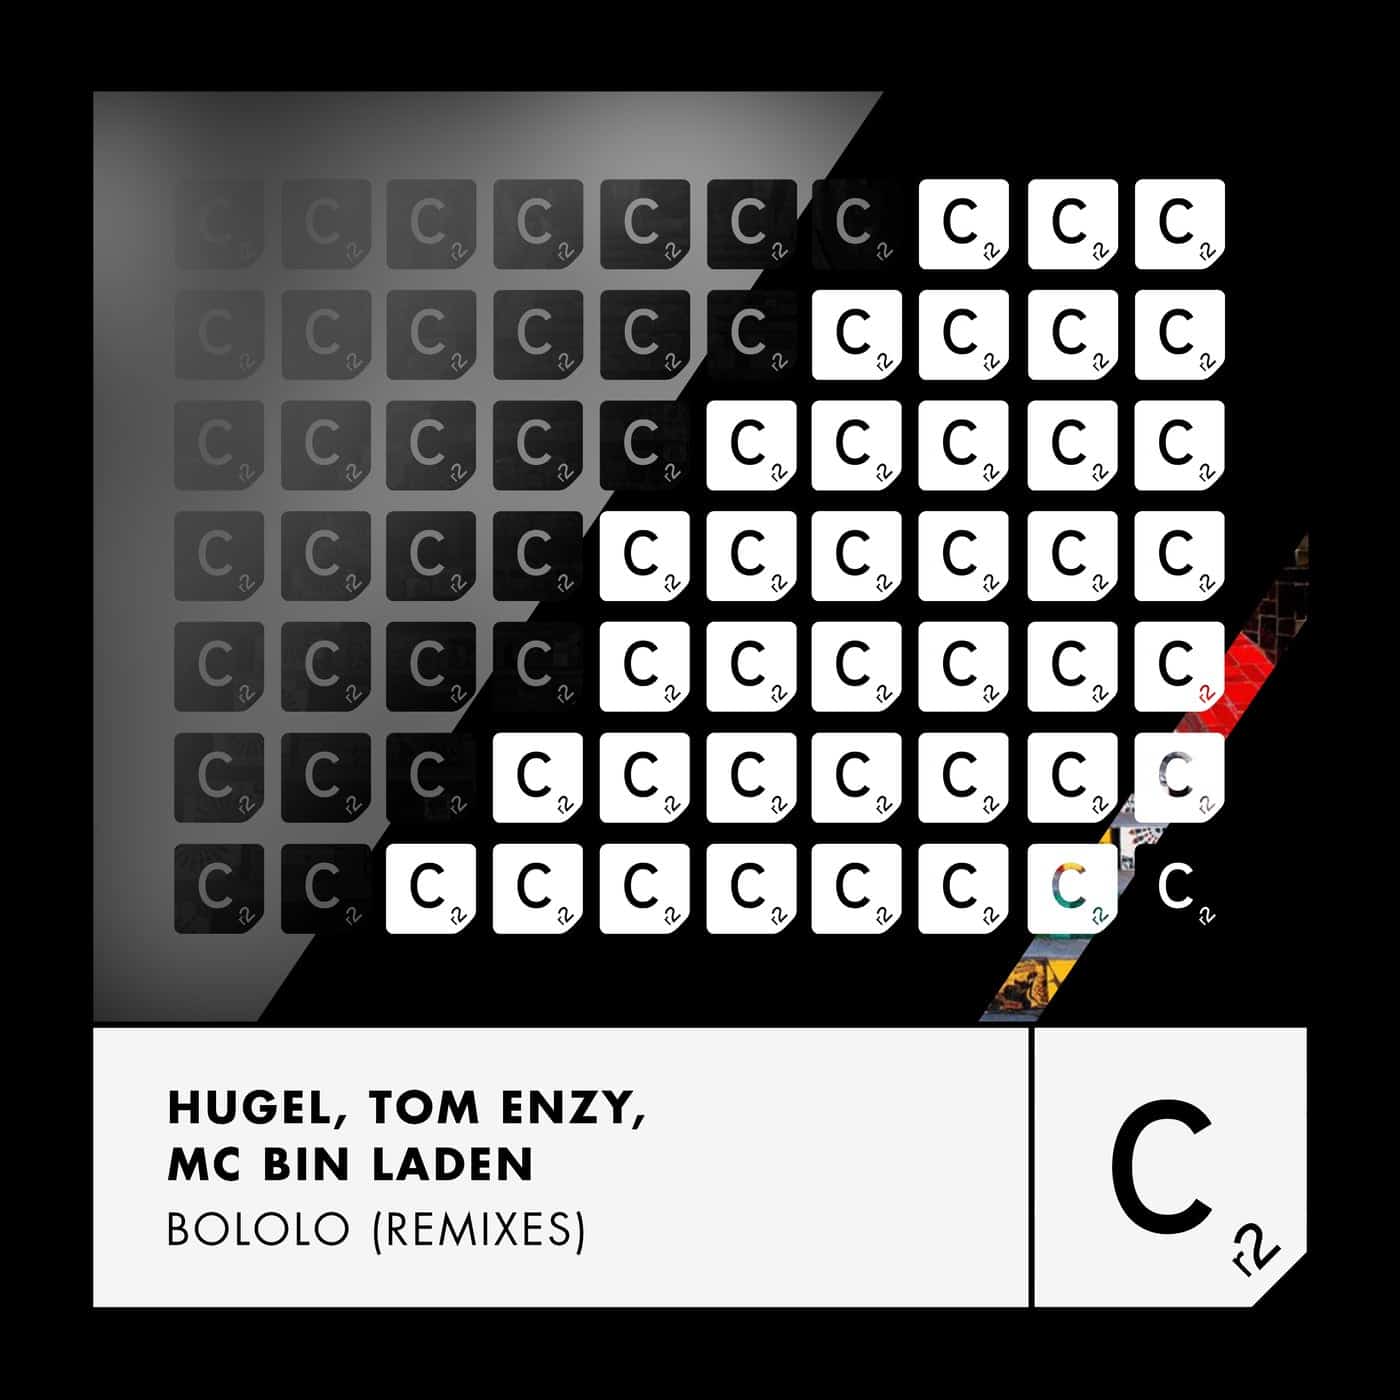 image cover: Tom Enzy, Hugel, MC Bin Laden - Bololo (Remixes) on Cr2 Records